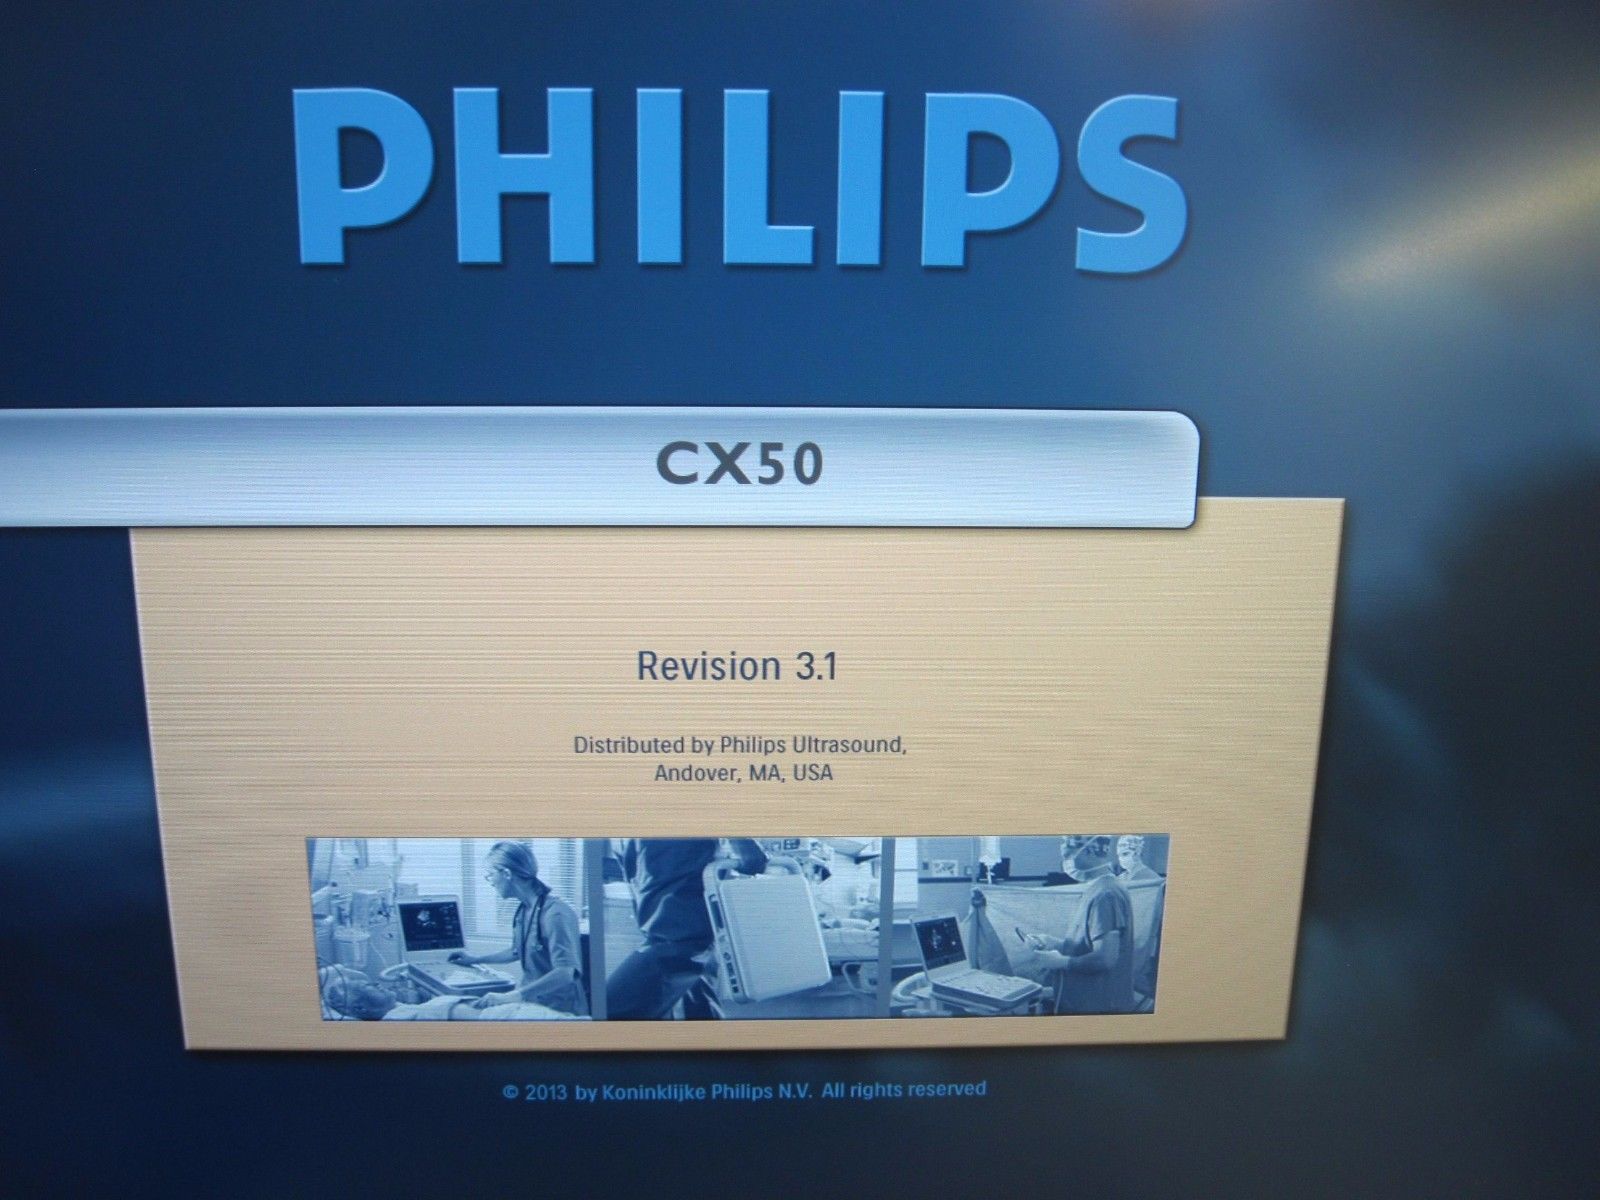 Philips CX50 Ultrasound System